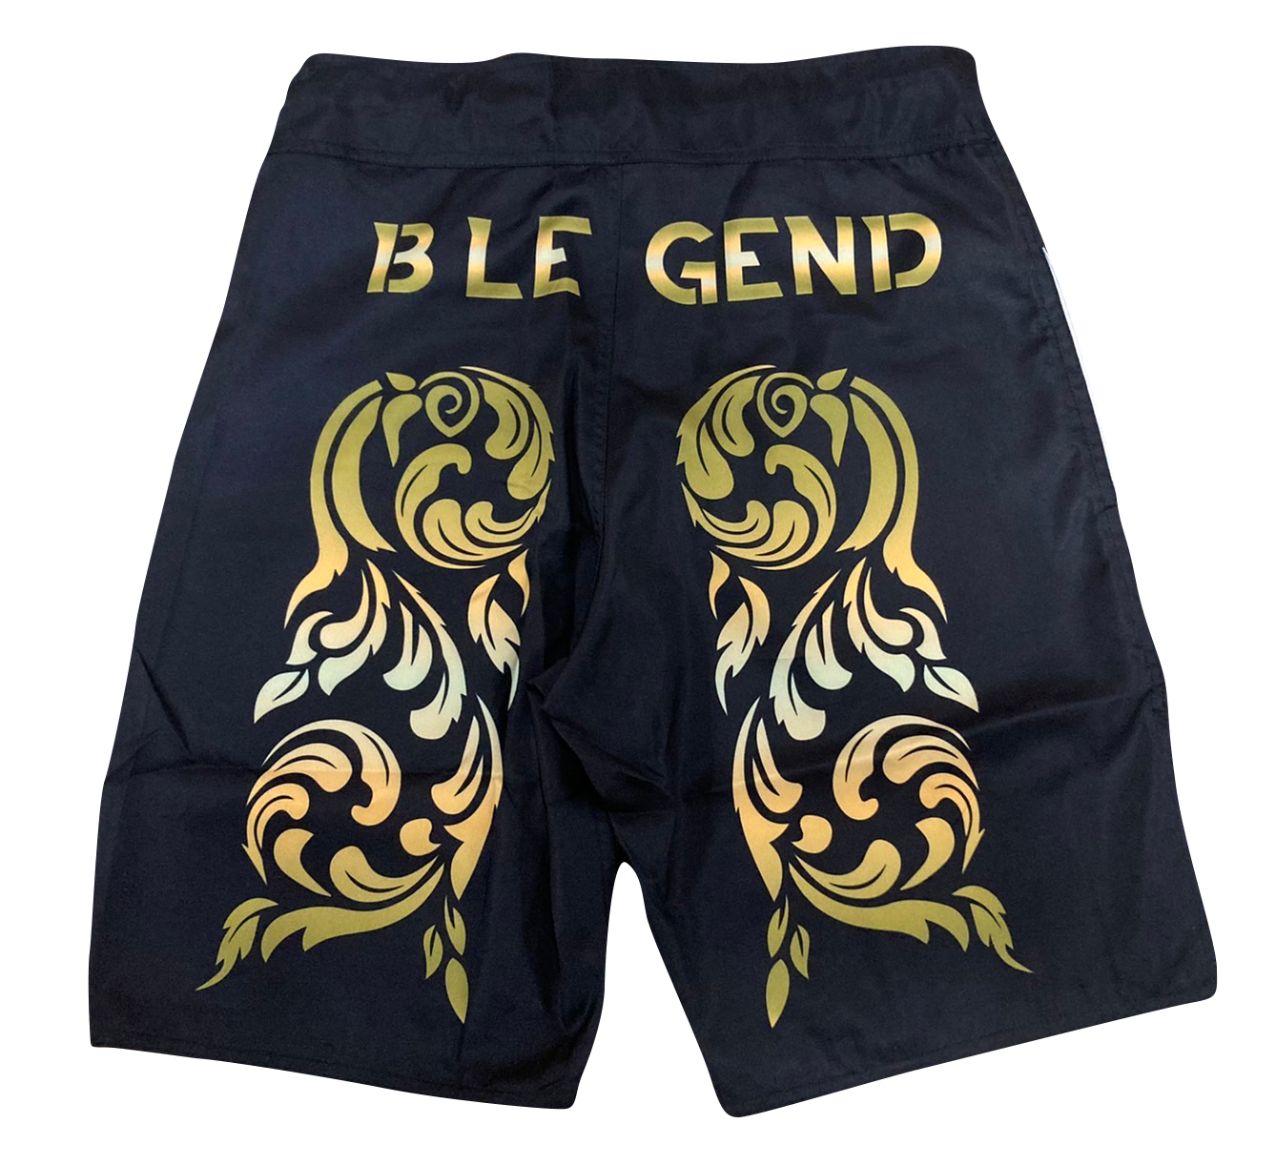 Blegend MMA Shorts Golden Era